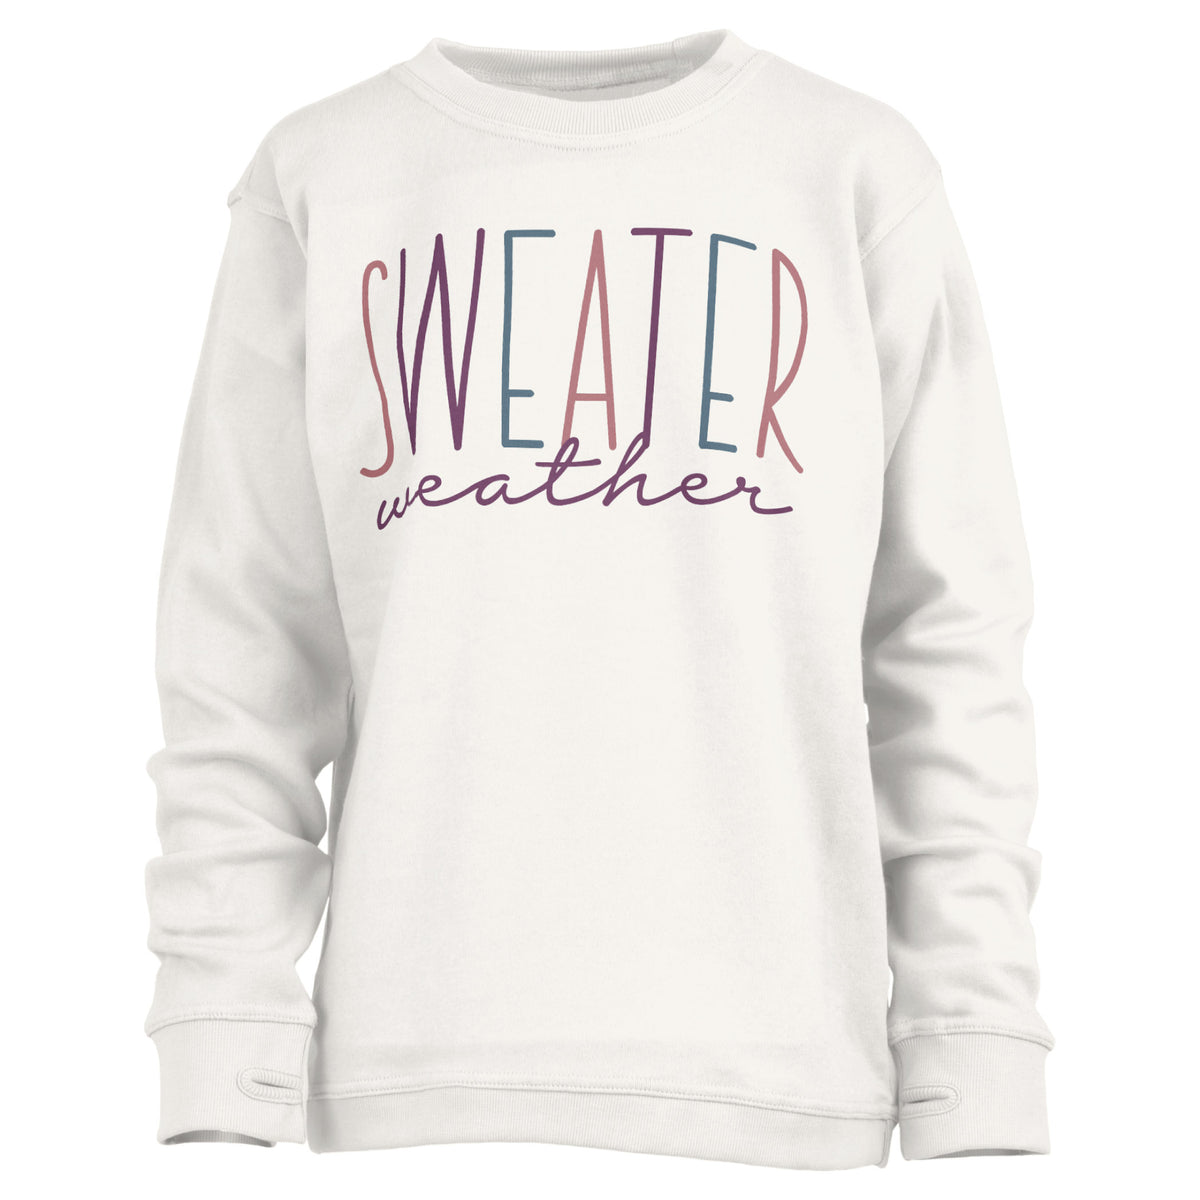 Sweater Weather Shoreline Light Weight Fleece